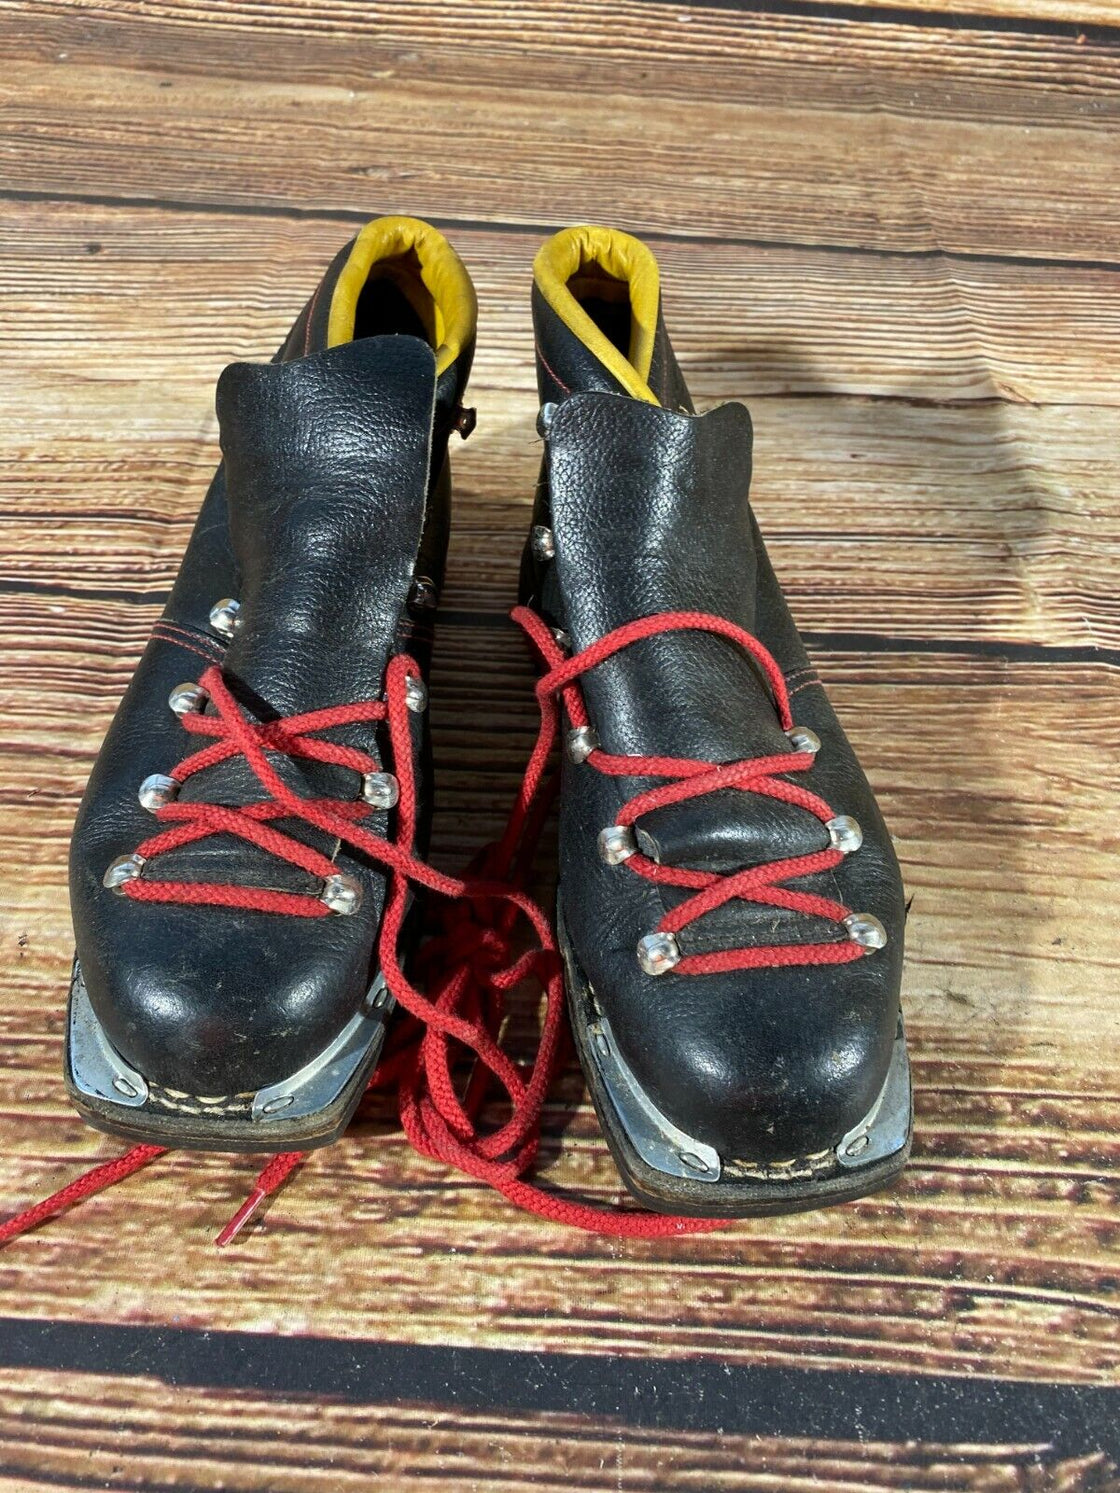 LAKE PLACID Leather Vintage Alpine Ski Boots EU37 US5 for Cable Bindings